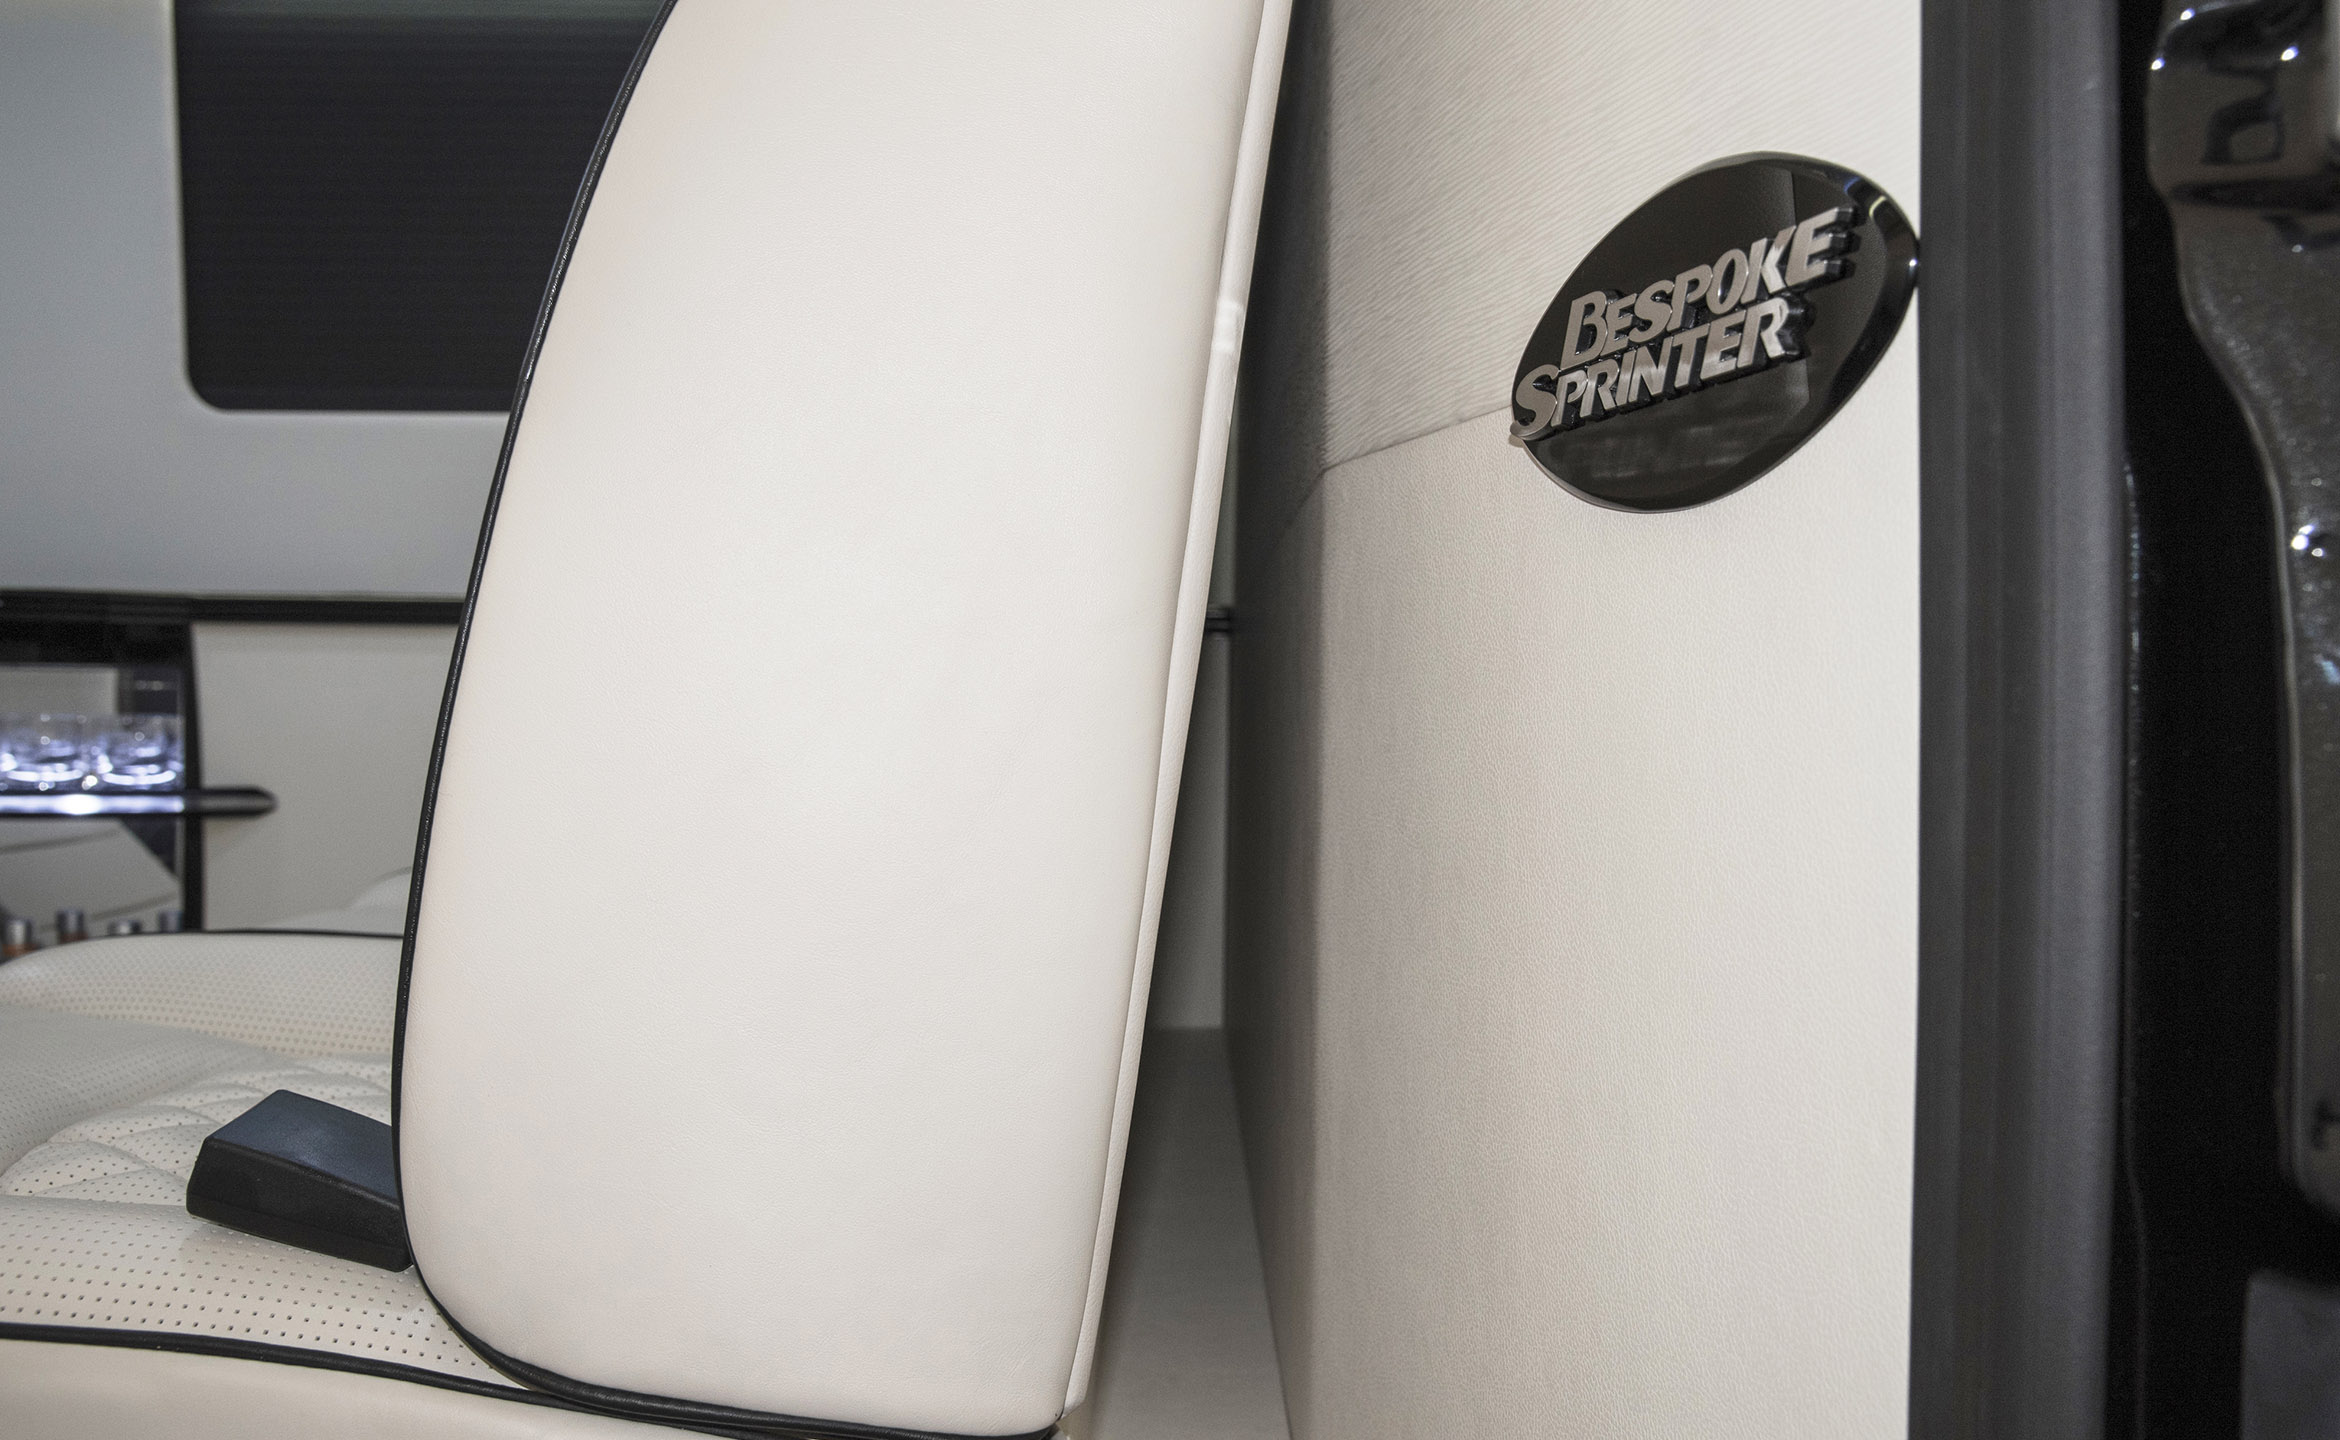 Custom Interior Bespoke Mercedes Benz Luxury Sprinter Van Conversion & Luxury Mobile Offices.